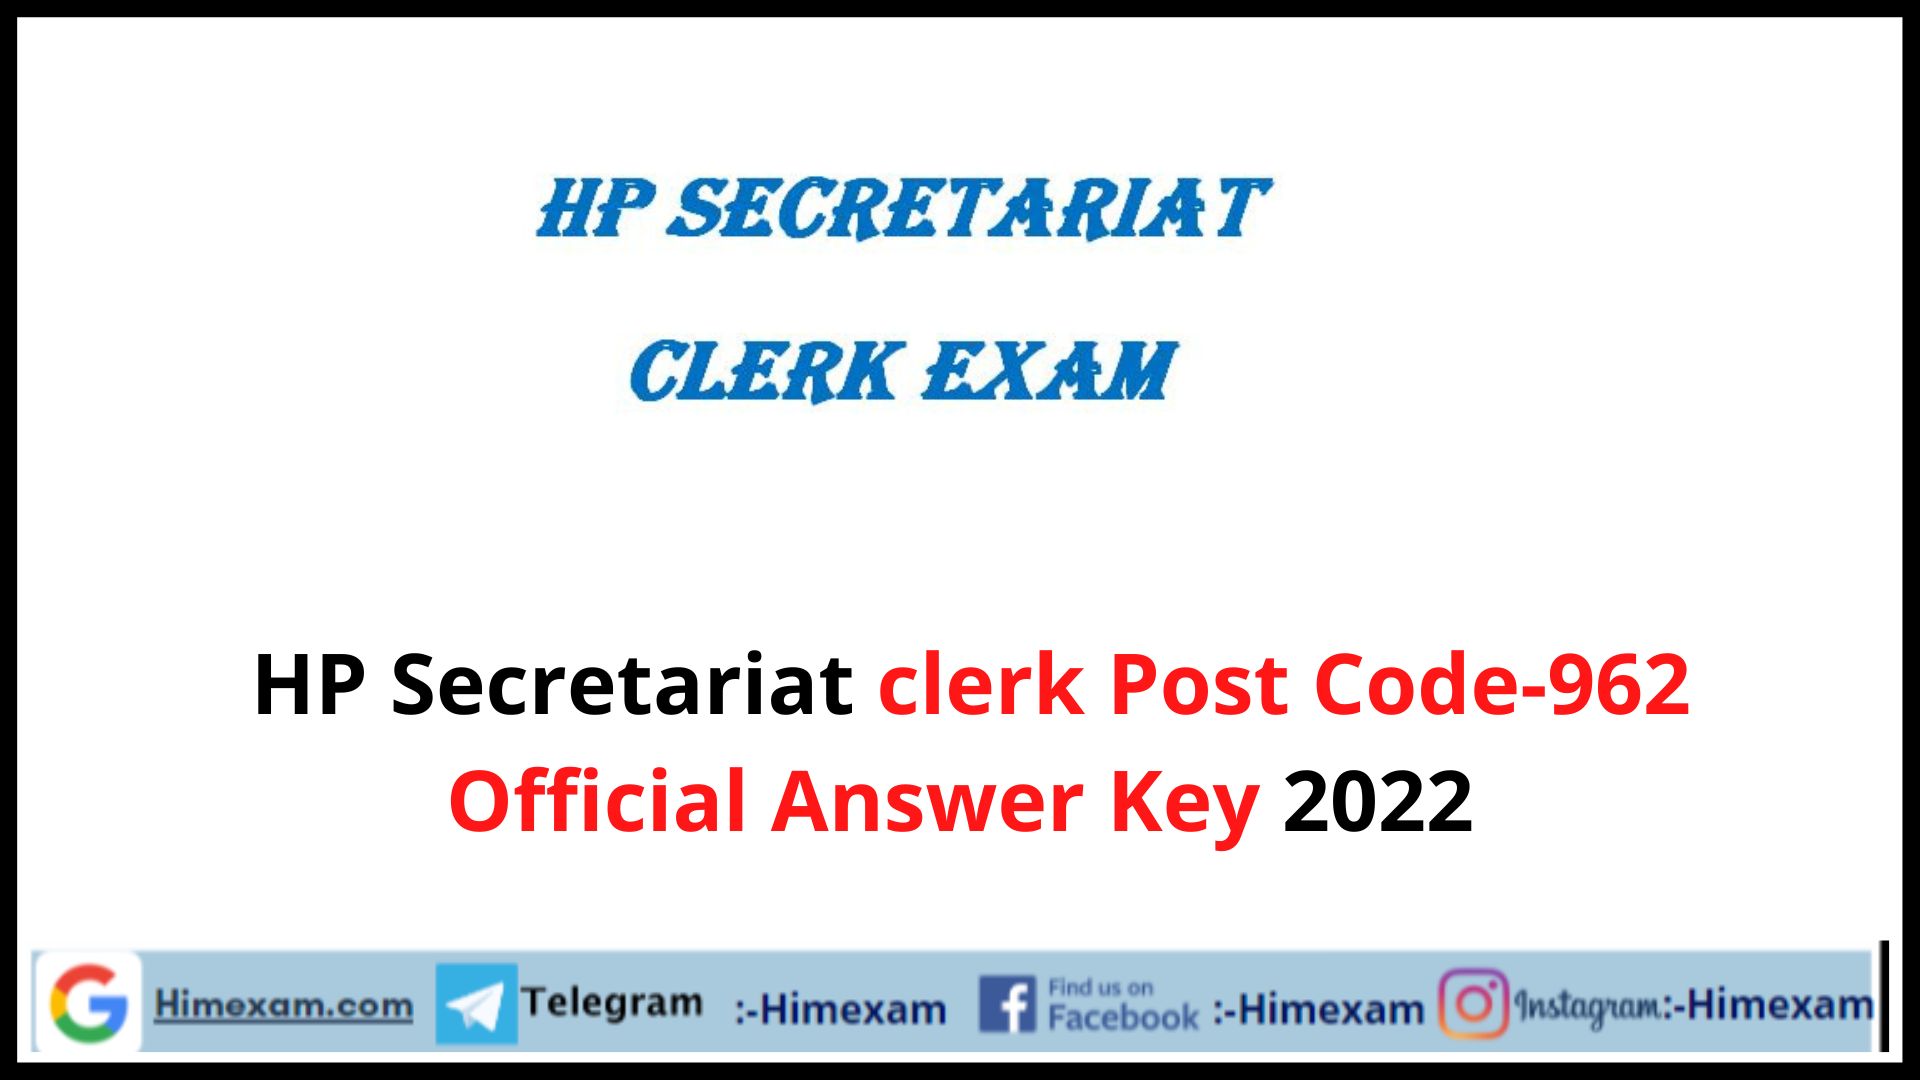 HP Secretariat clerk Post Code-962 Official Answer Key 2022